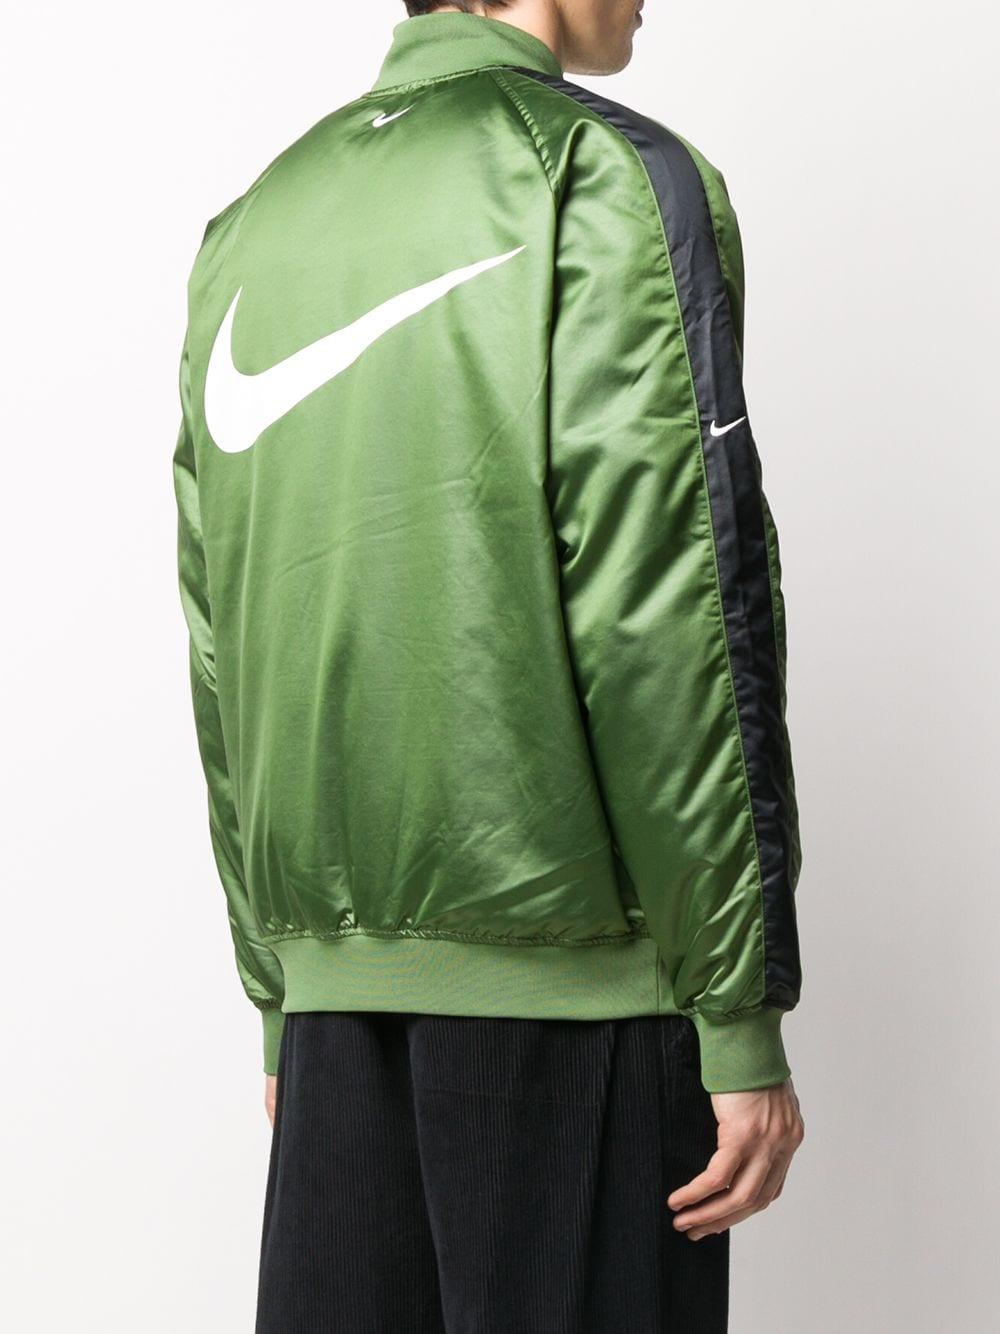 Nike Swoosh Bomber Jacket in Green for Men - Lyst